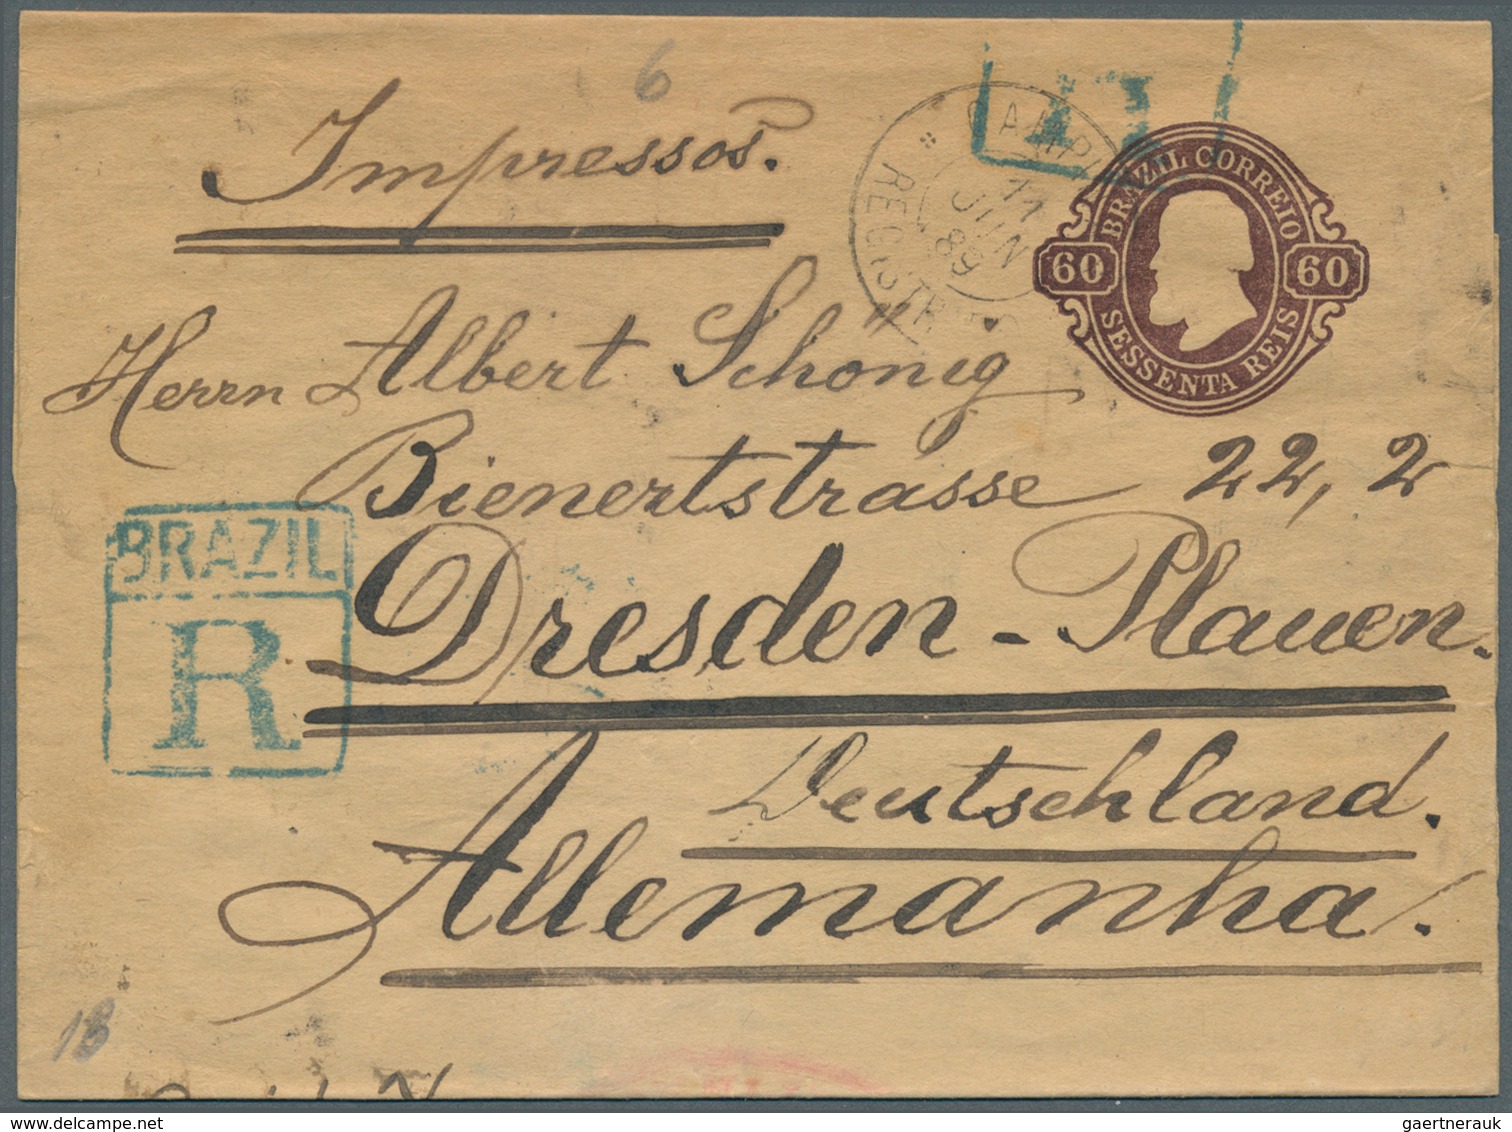 Mittel- und Südamerika: 1880/1920 (ca.), nice lot with over 450 postal stationaries, with Brasil, Gu